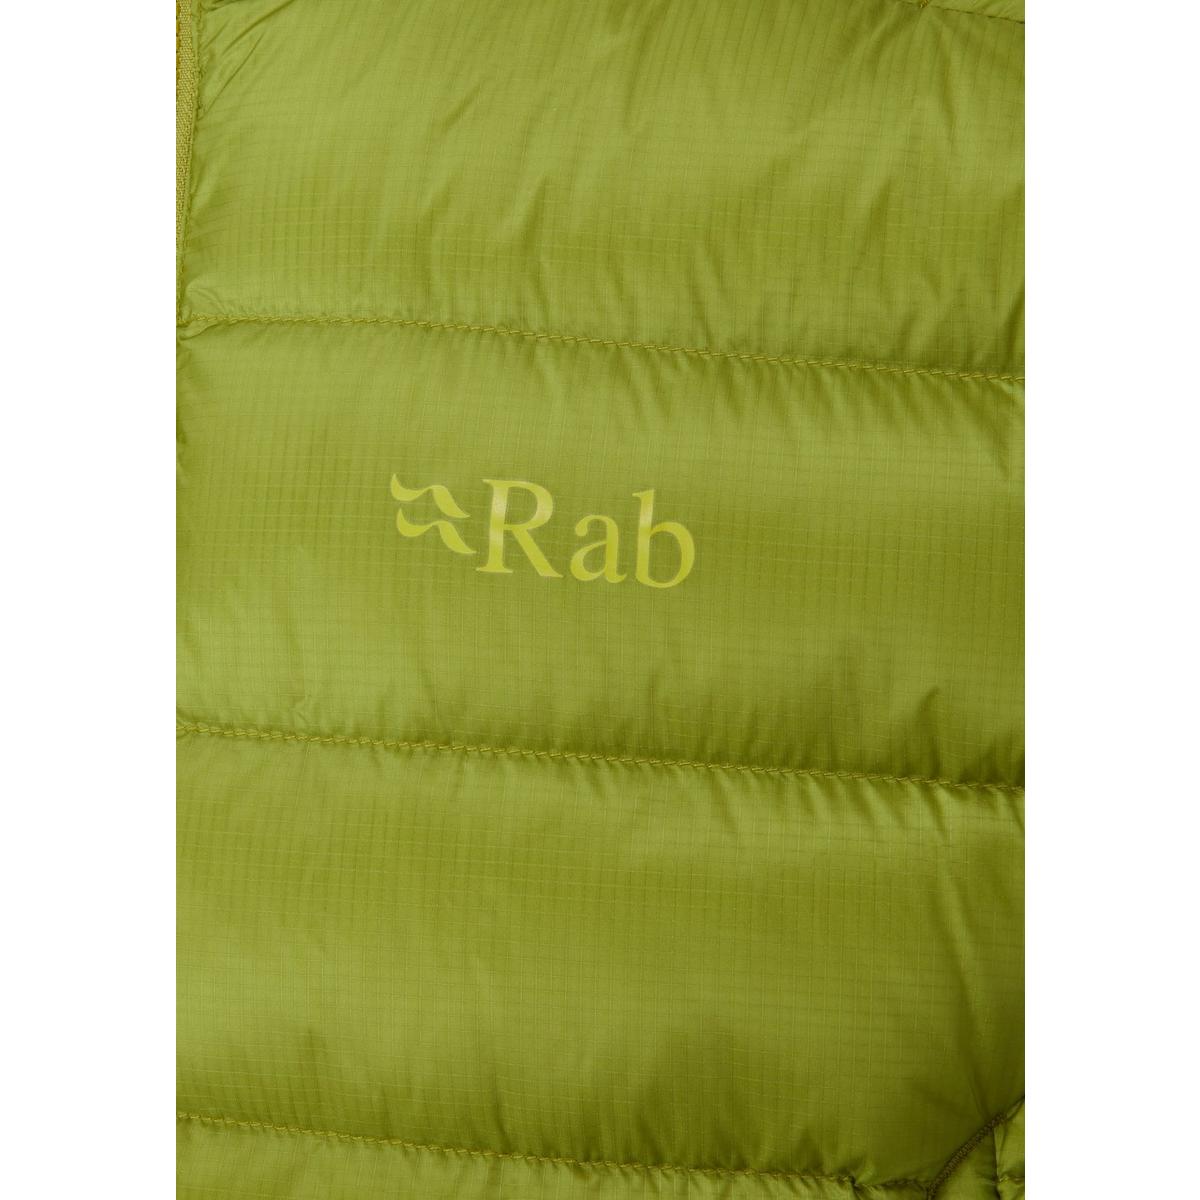 Rab Men's Electron Pro Jacket - Aspen Green